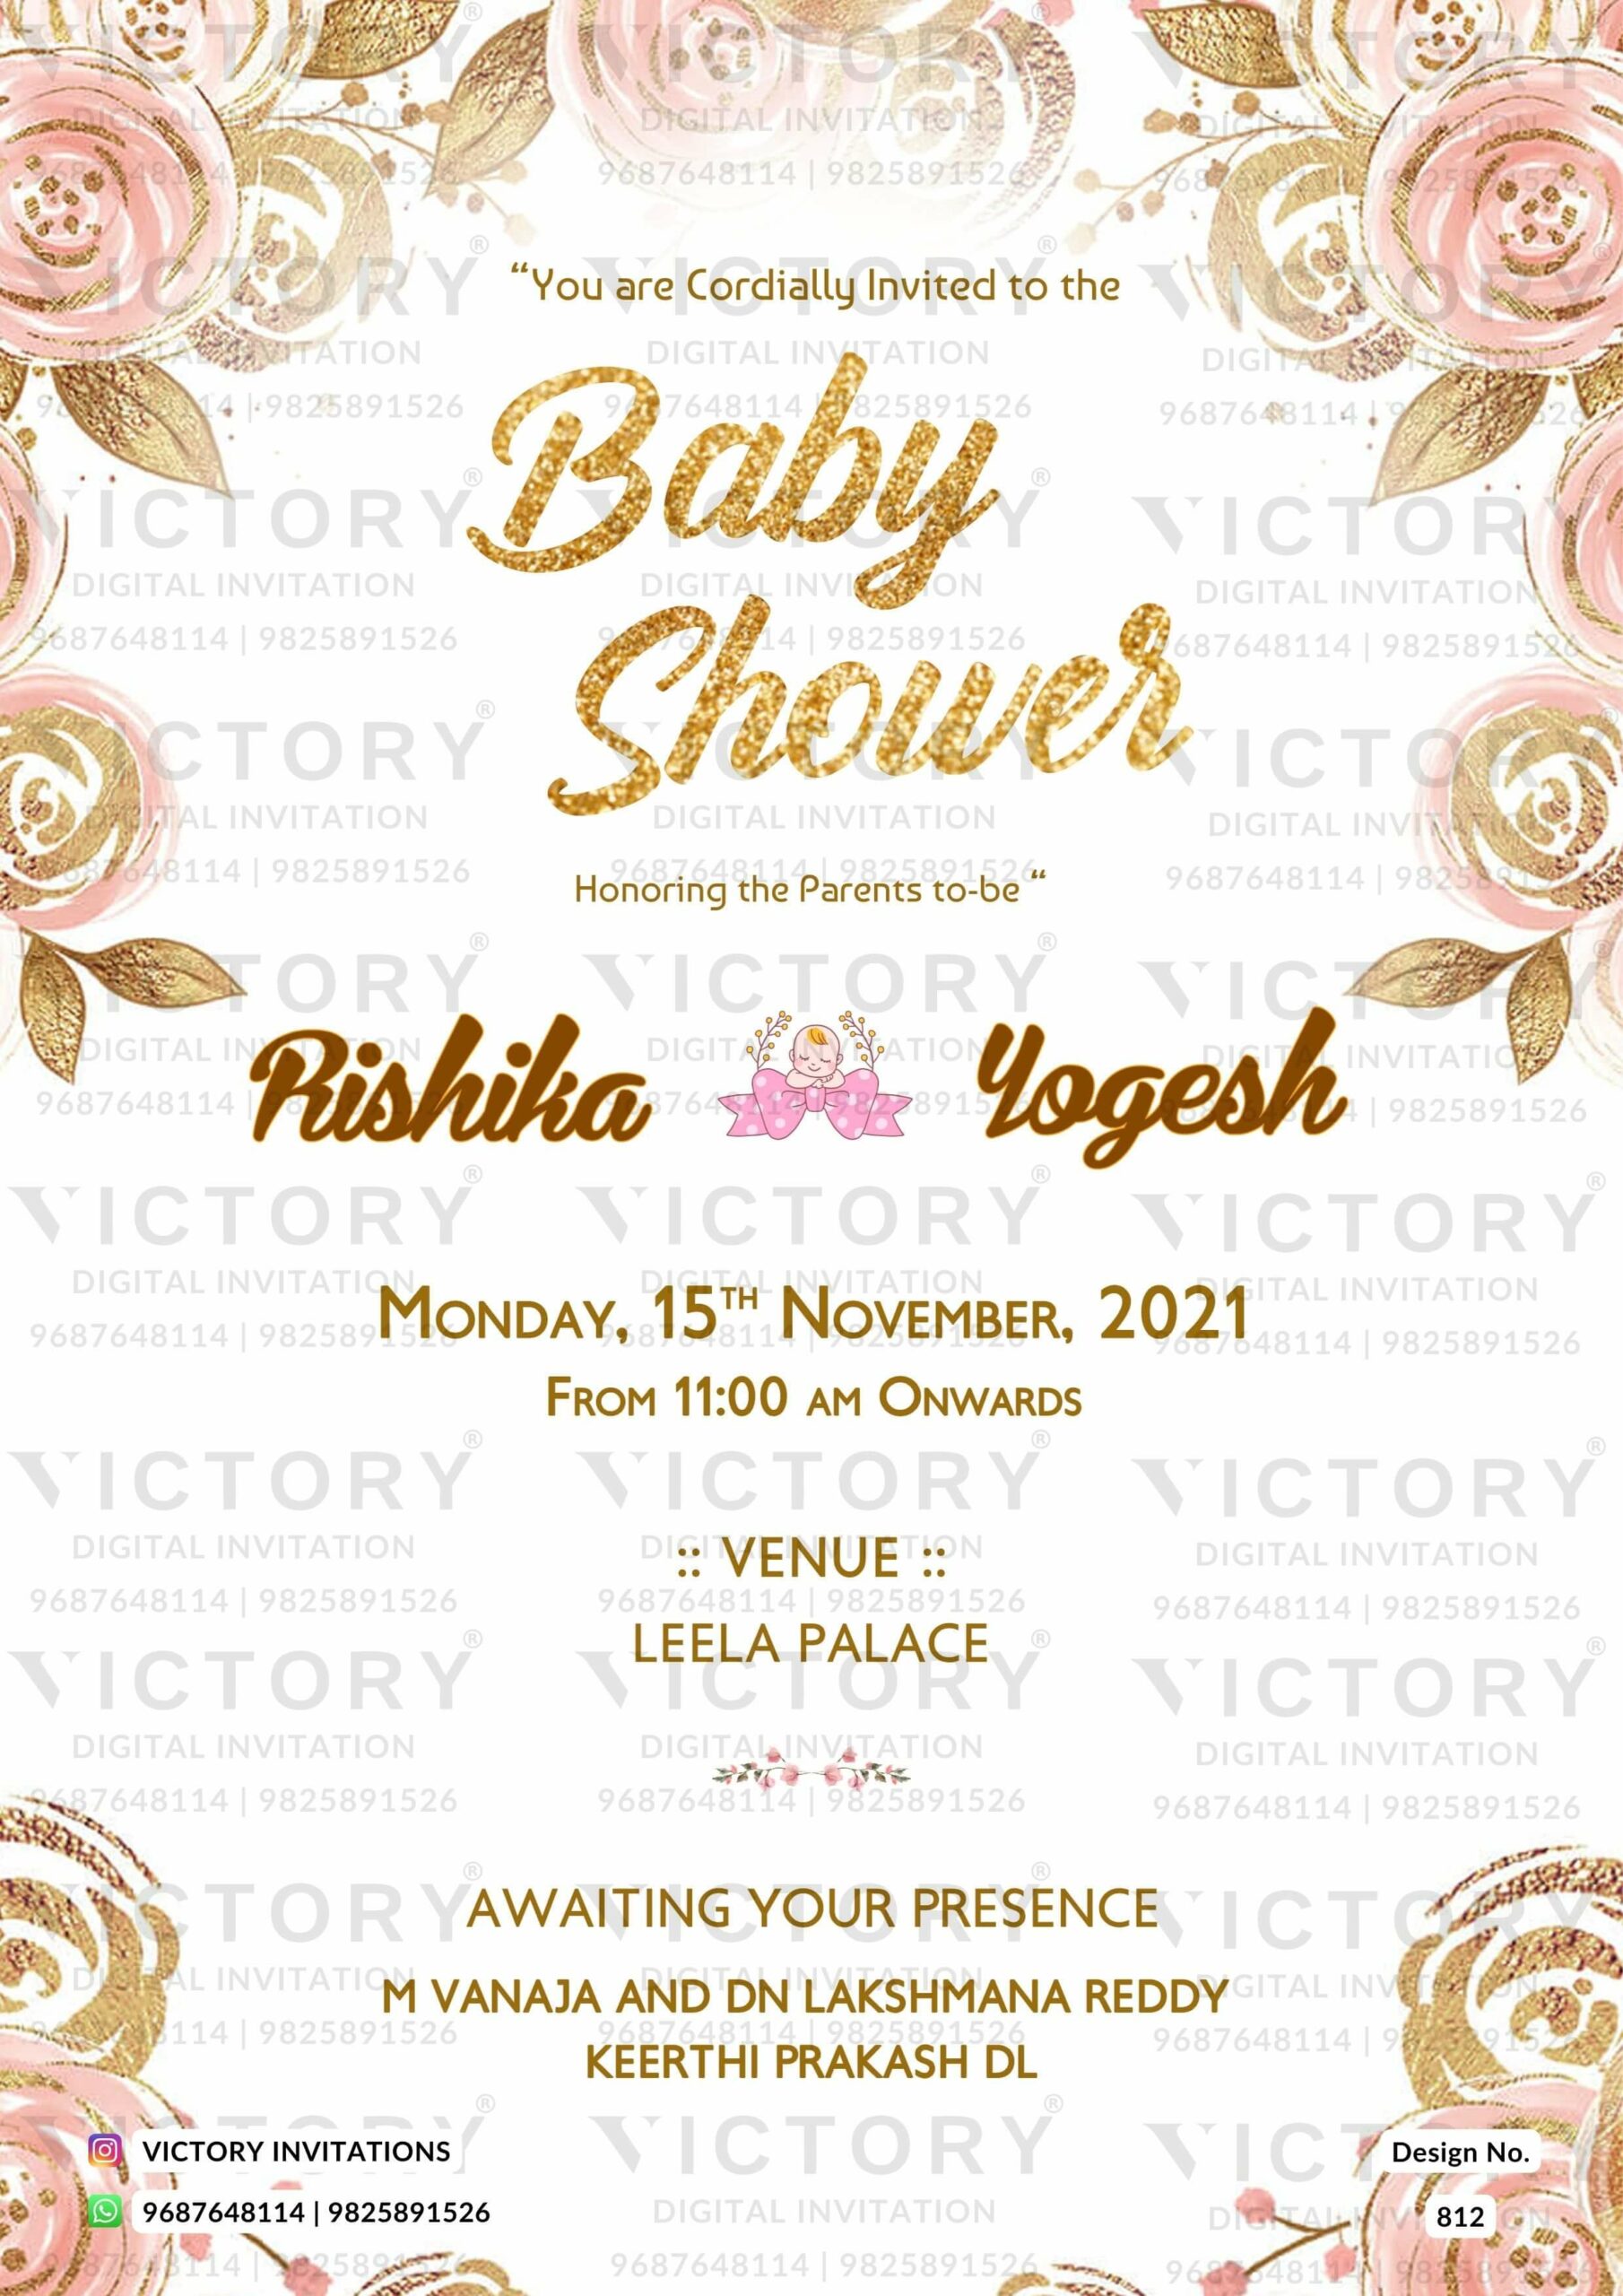 Baby Shower digital invitation card in english design no.812